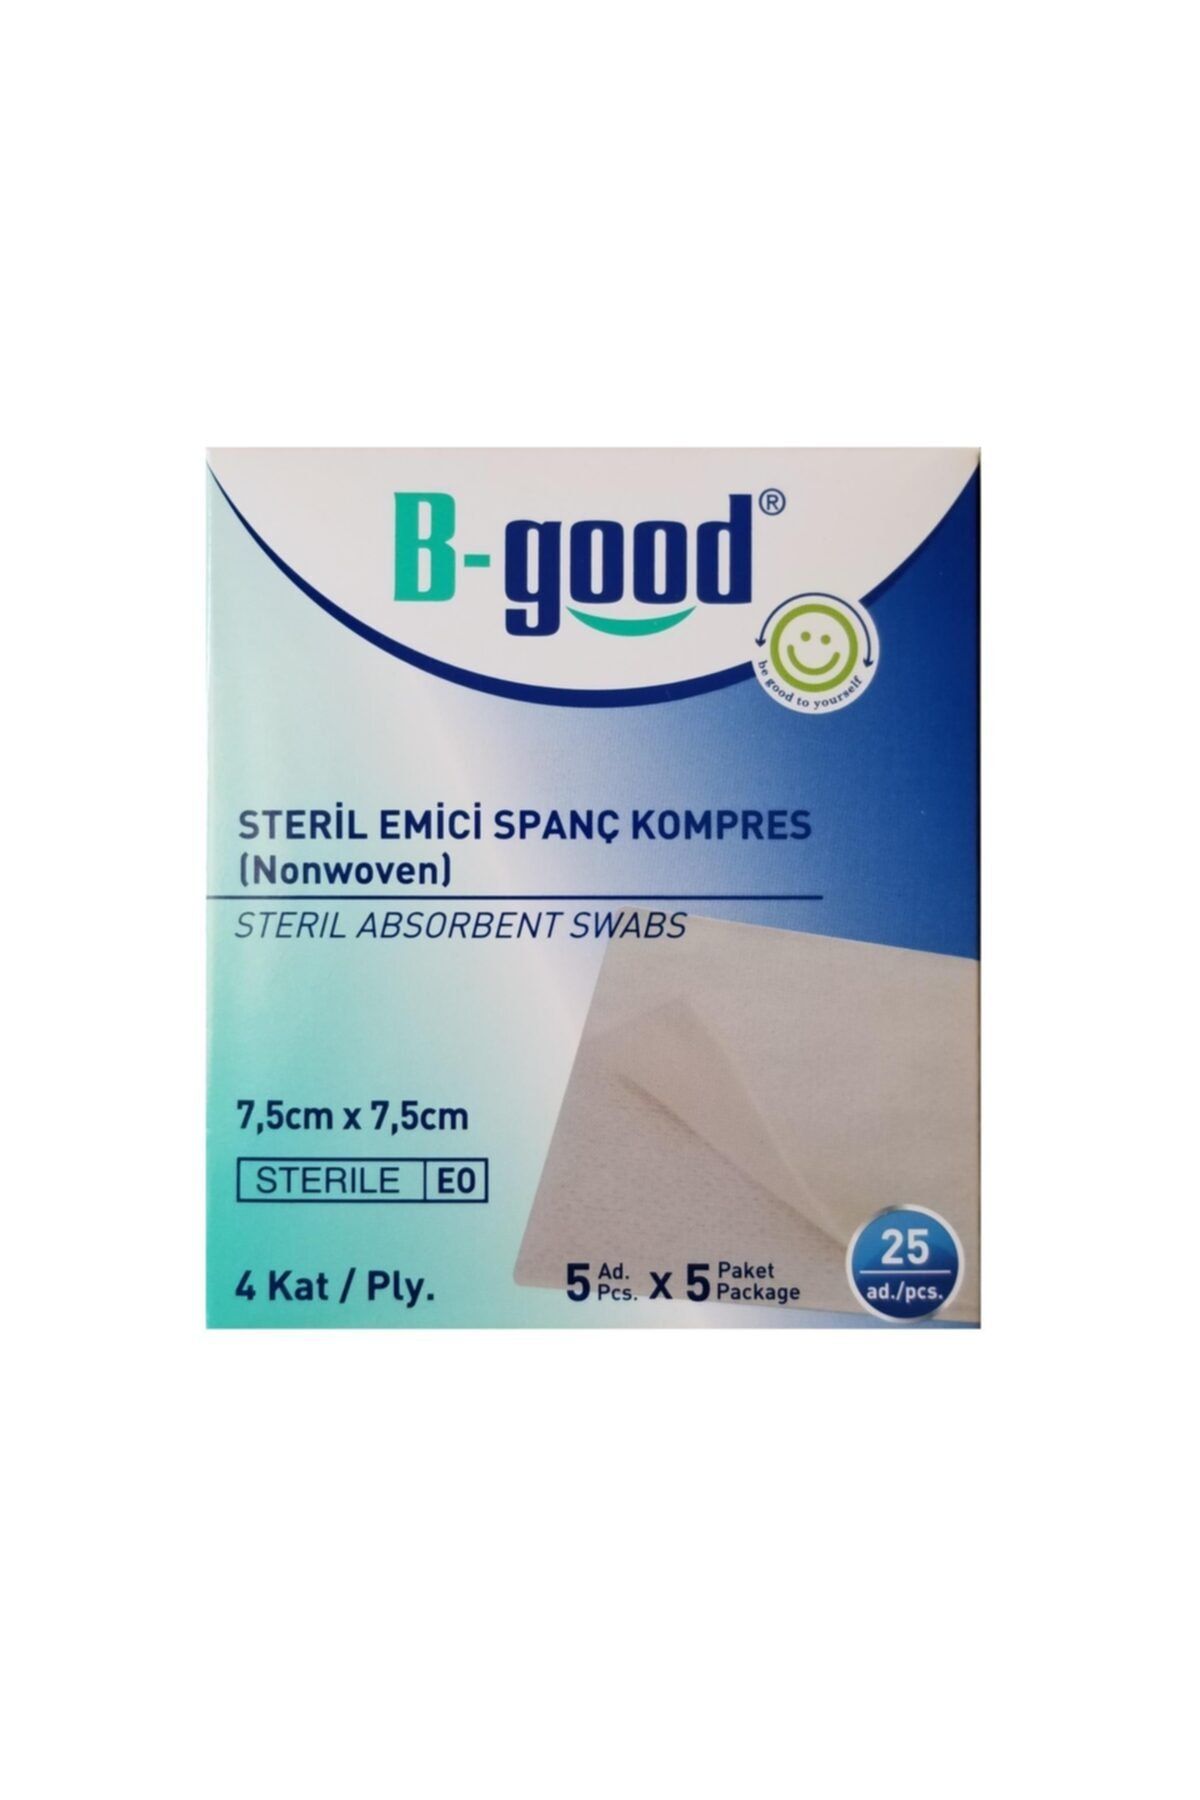 B-GOOD Steril Emici Spanç Kompres 7.5cmx7.5cm 25li